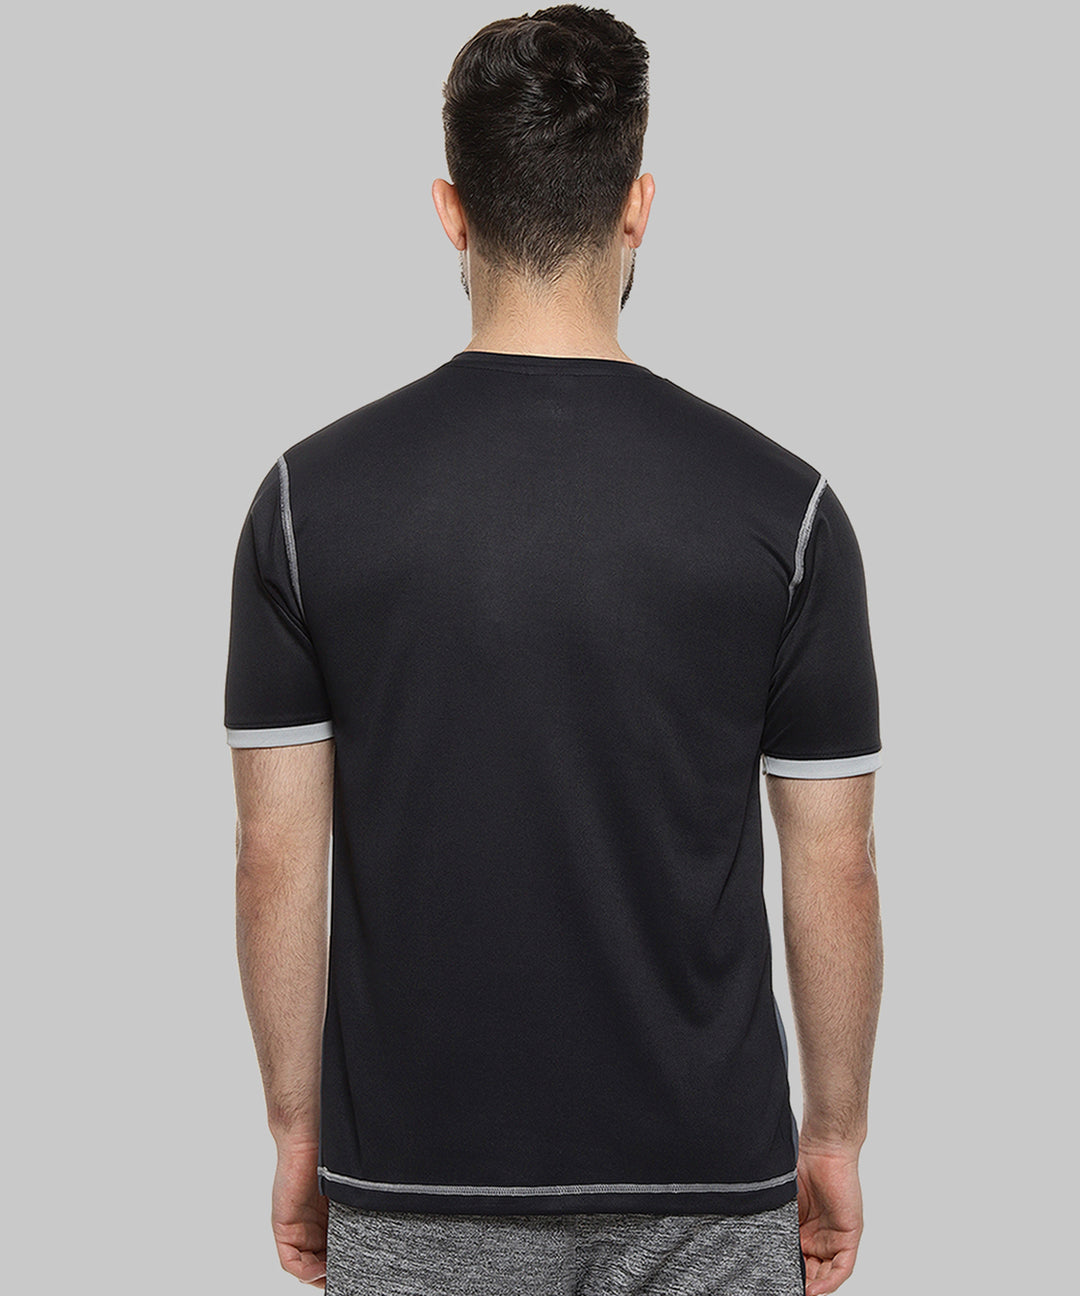 Black Men Solid Polyester Sports Tshirt Mandarin Collar